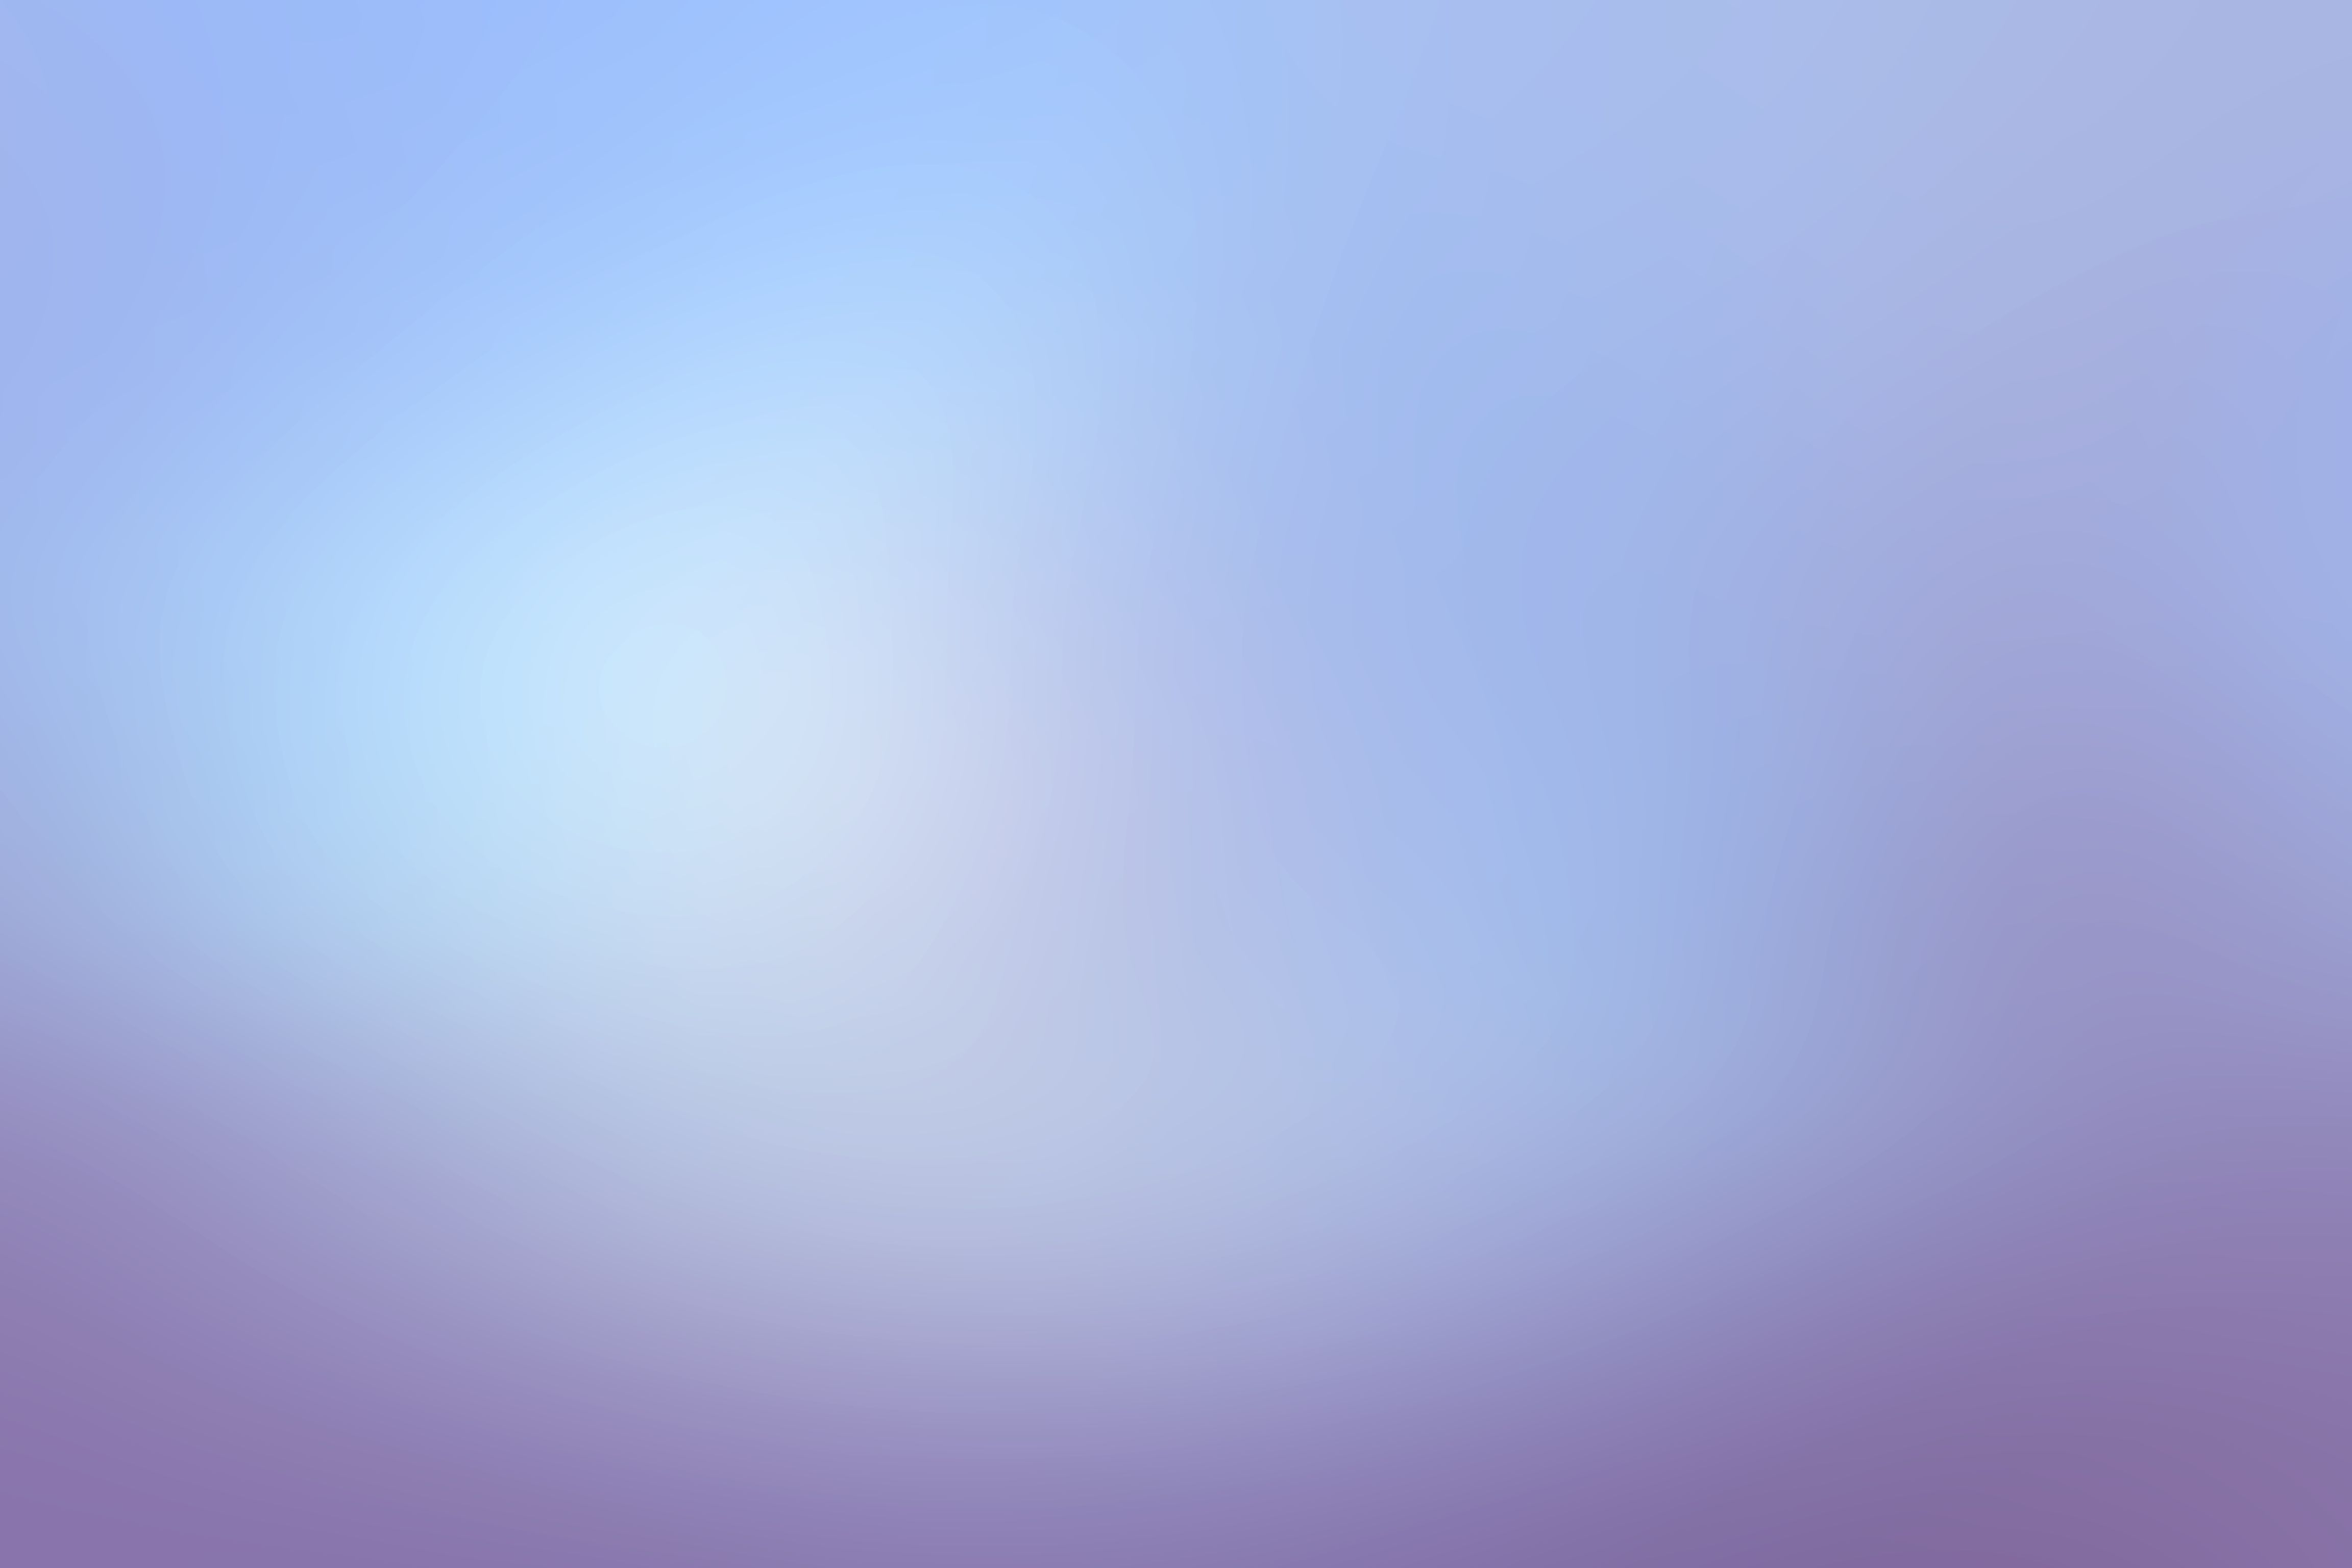 742173 descargar imagen simple, abstracto, púrpura, azul, difuminado: fondos de pantalla y protectores de pantalla gratis